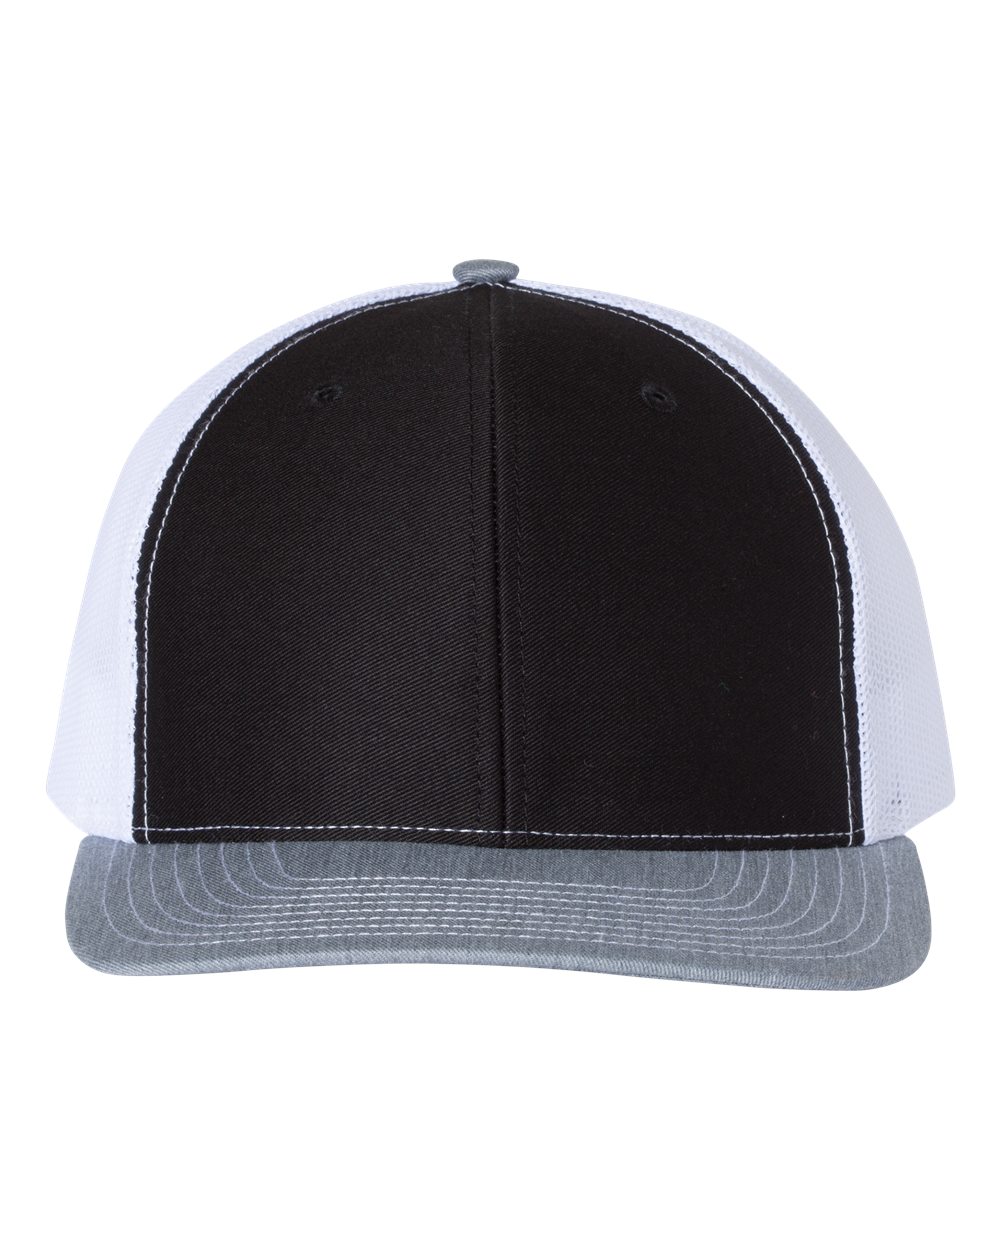 Richardson Snapback Trucker Hat (112) in Black/White/Heather Grey